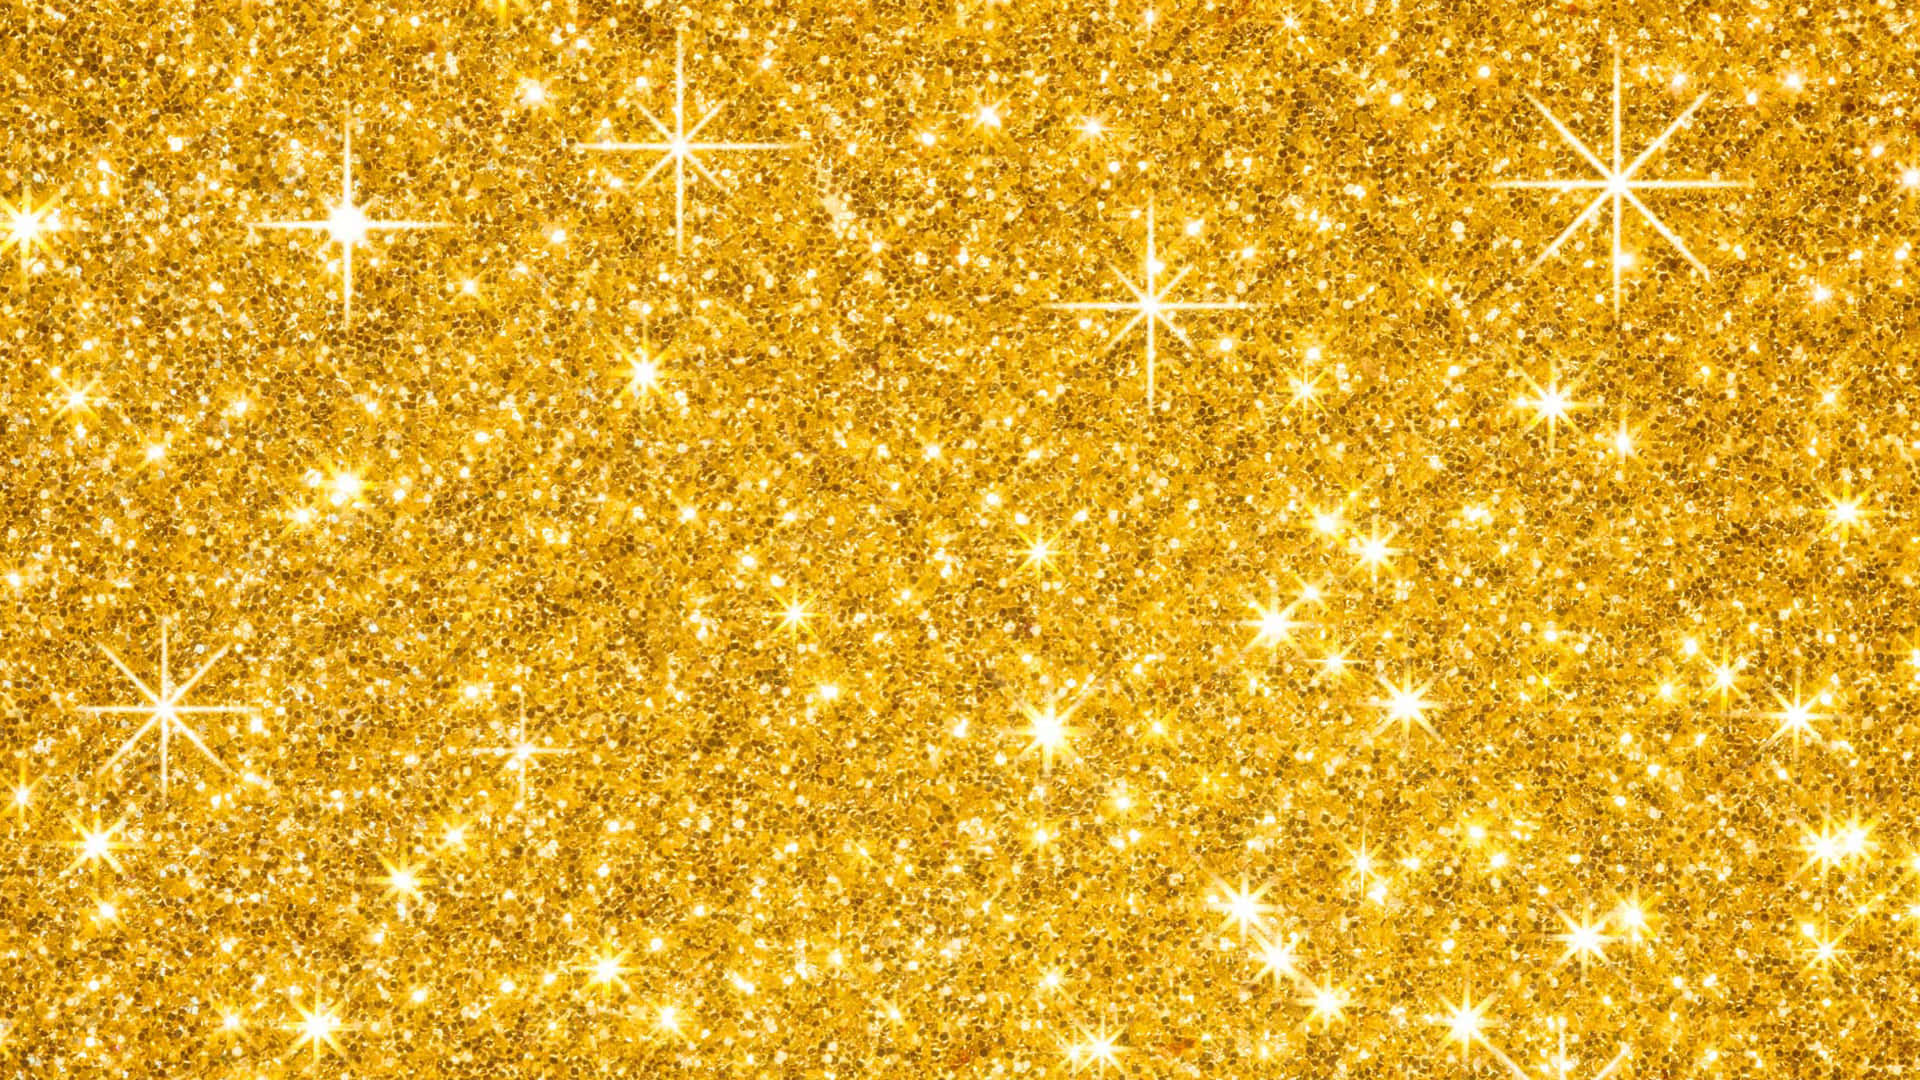 Fejre en godt gjort job med glimrende gule stjerner! Wallpaper